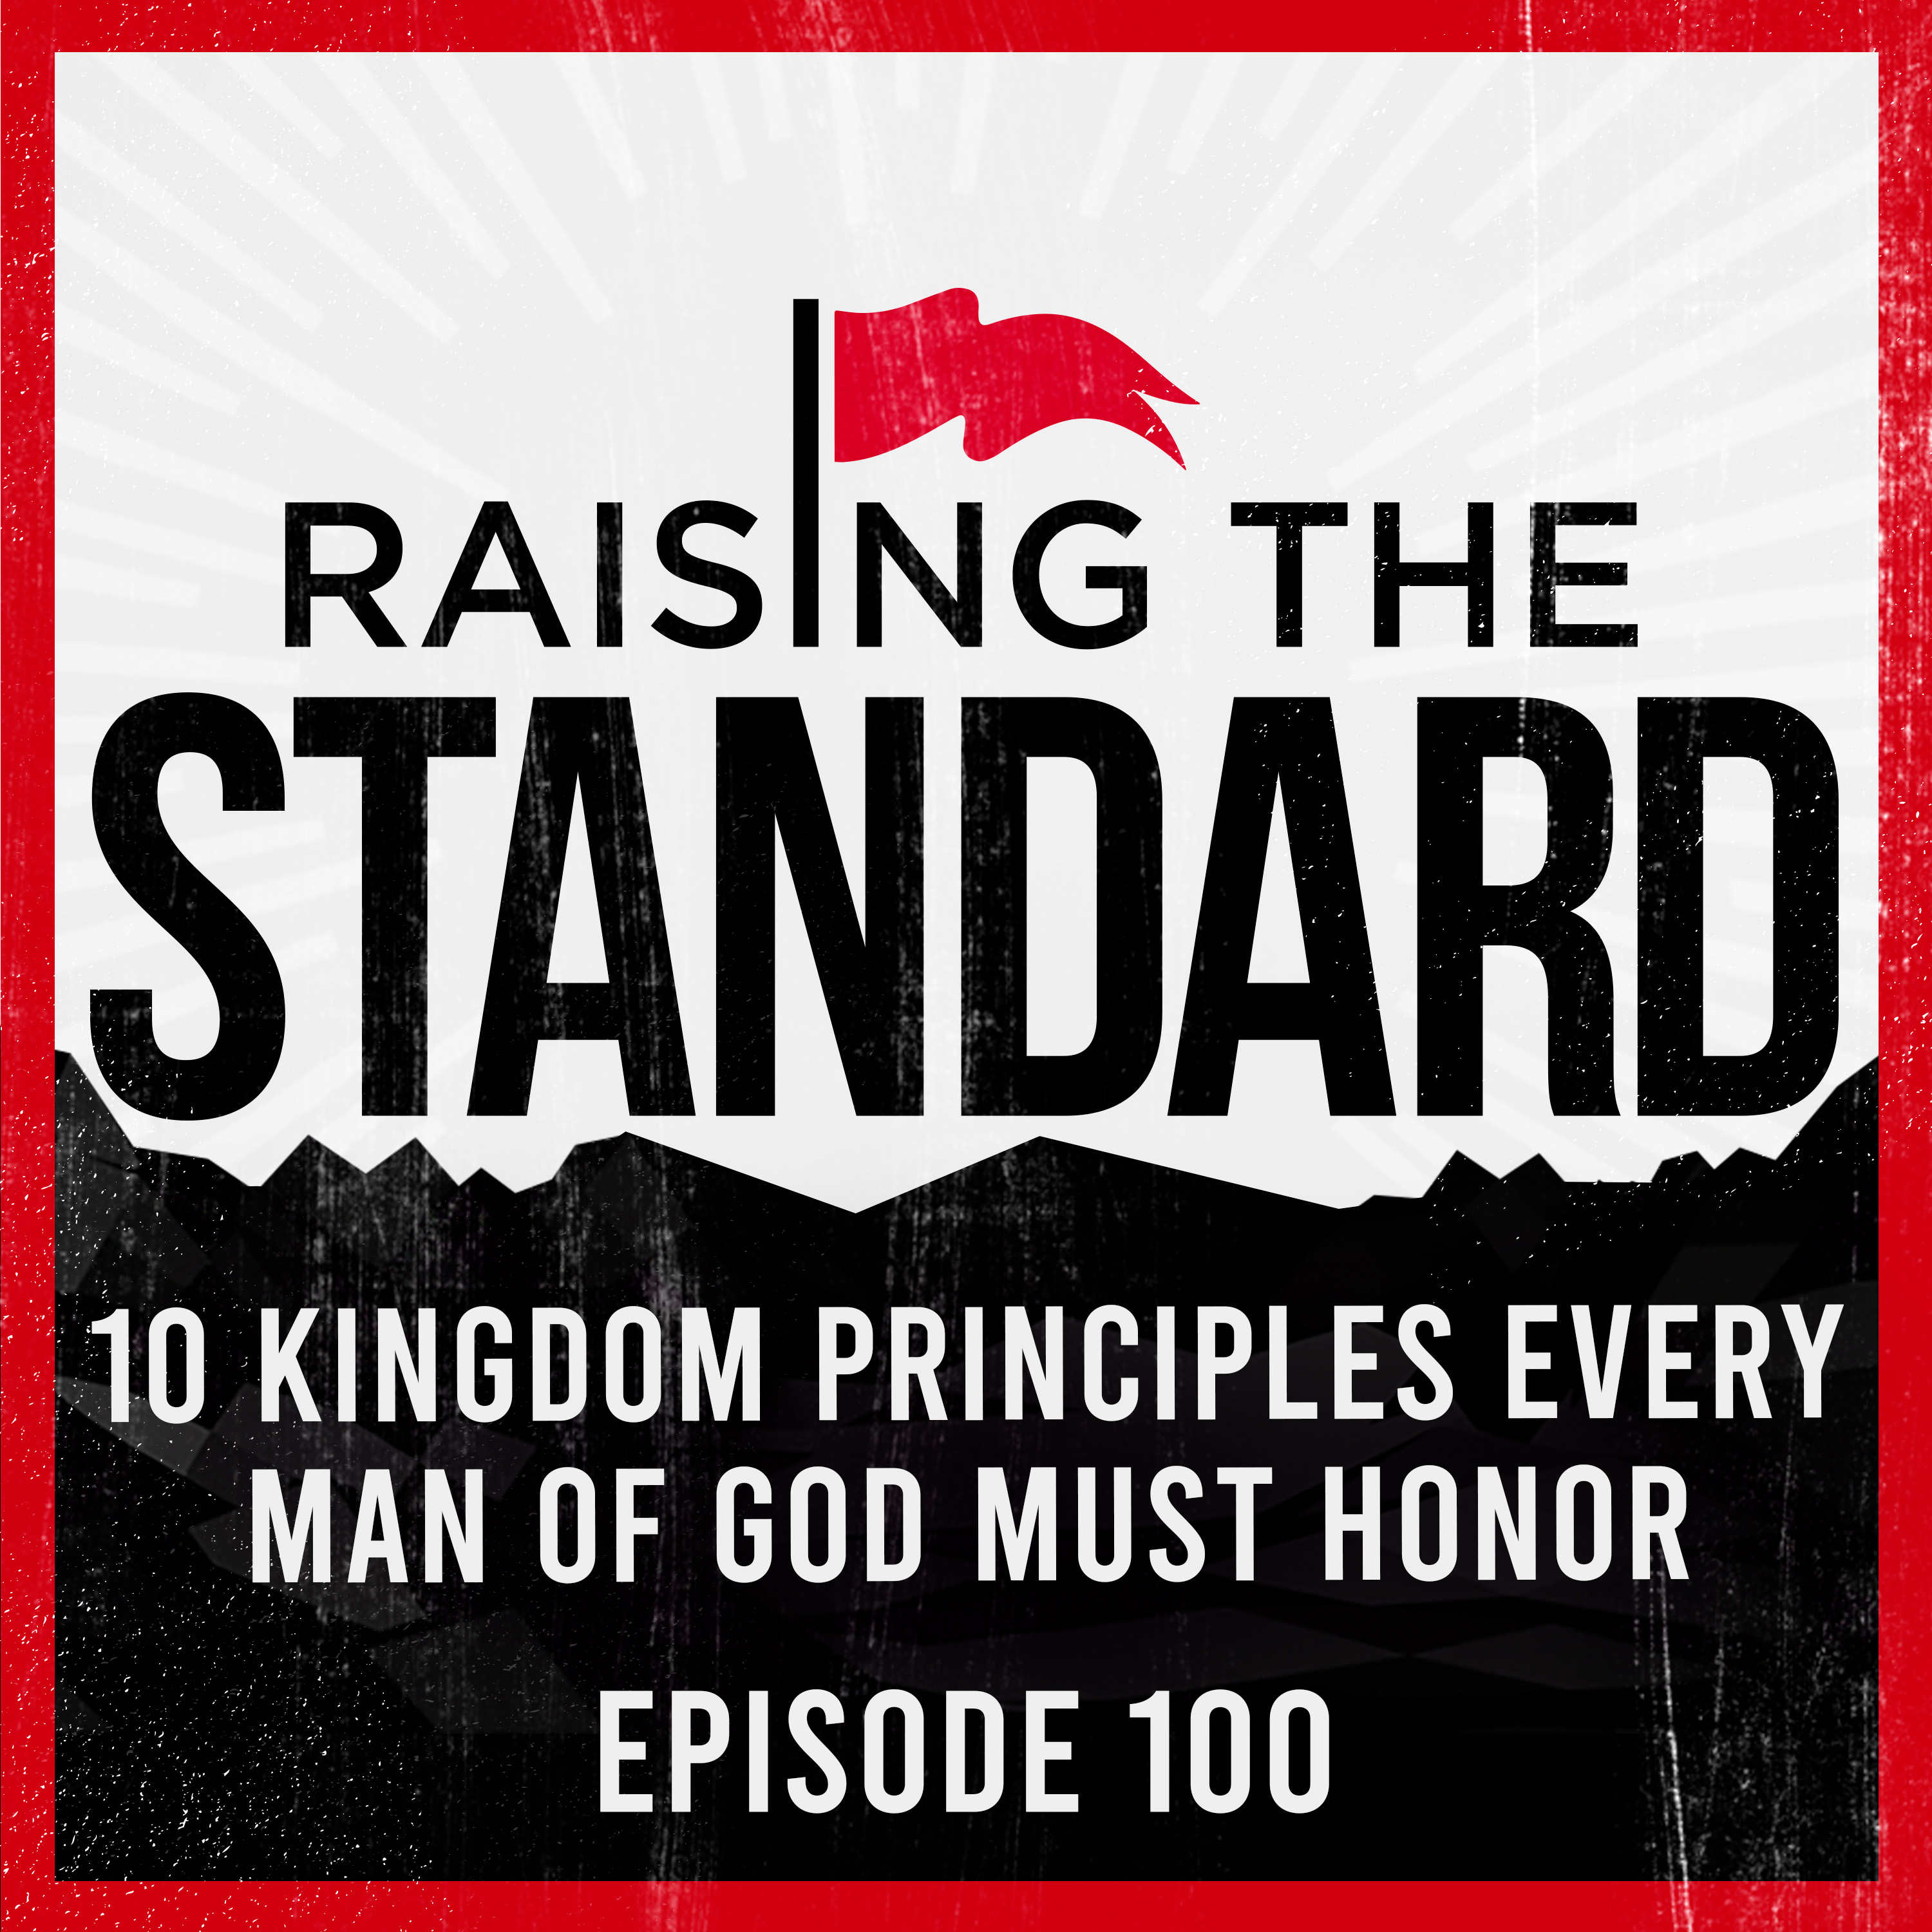 10 Kingdom Principles Every Man of God Must Honor